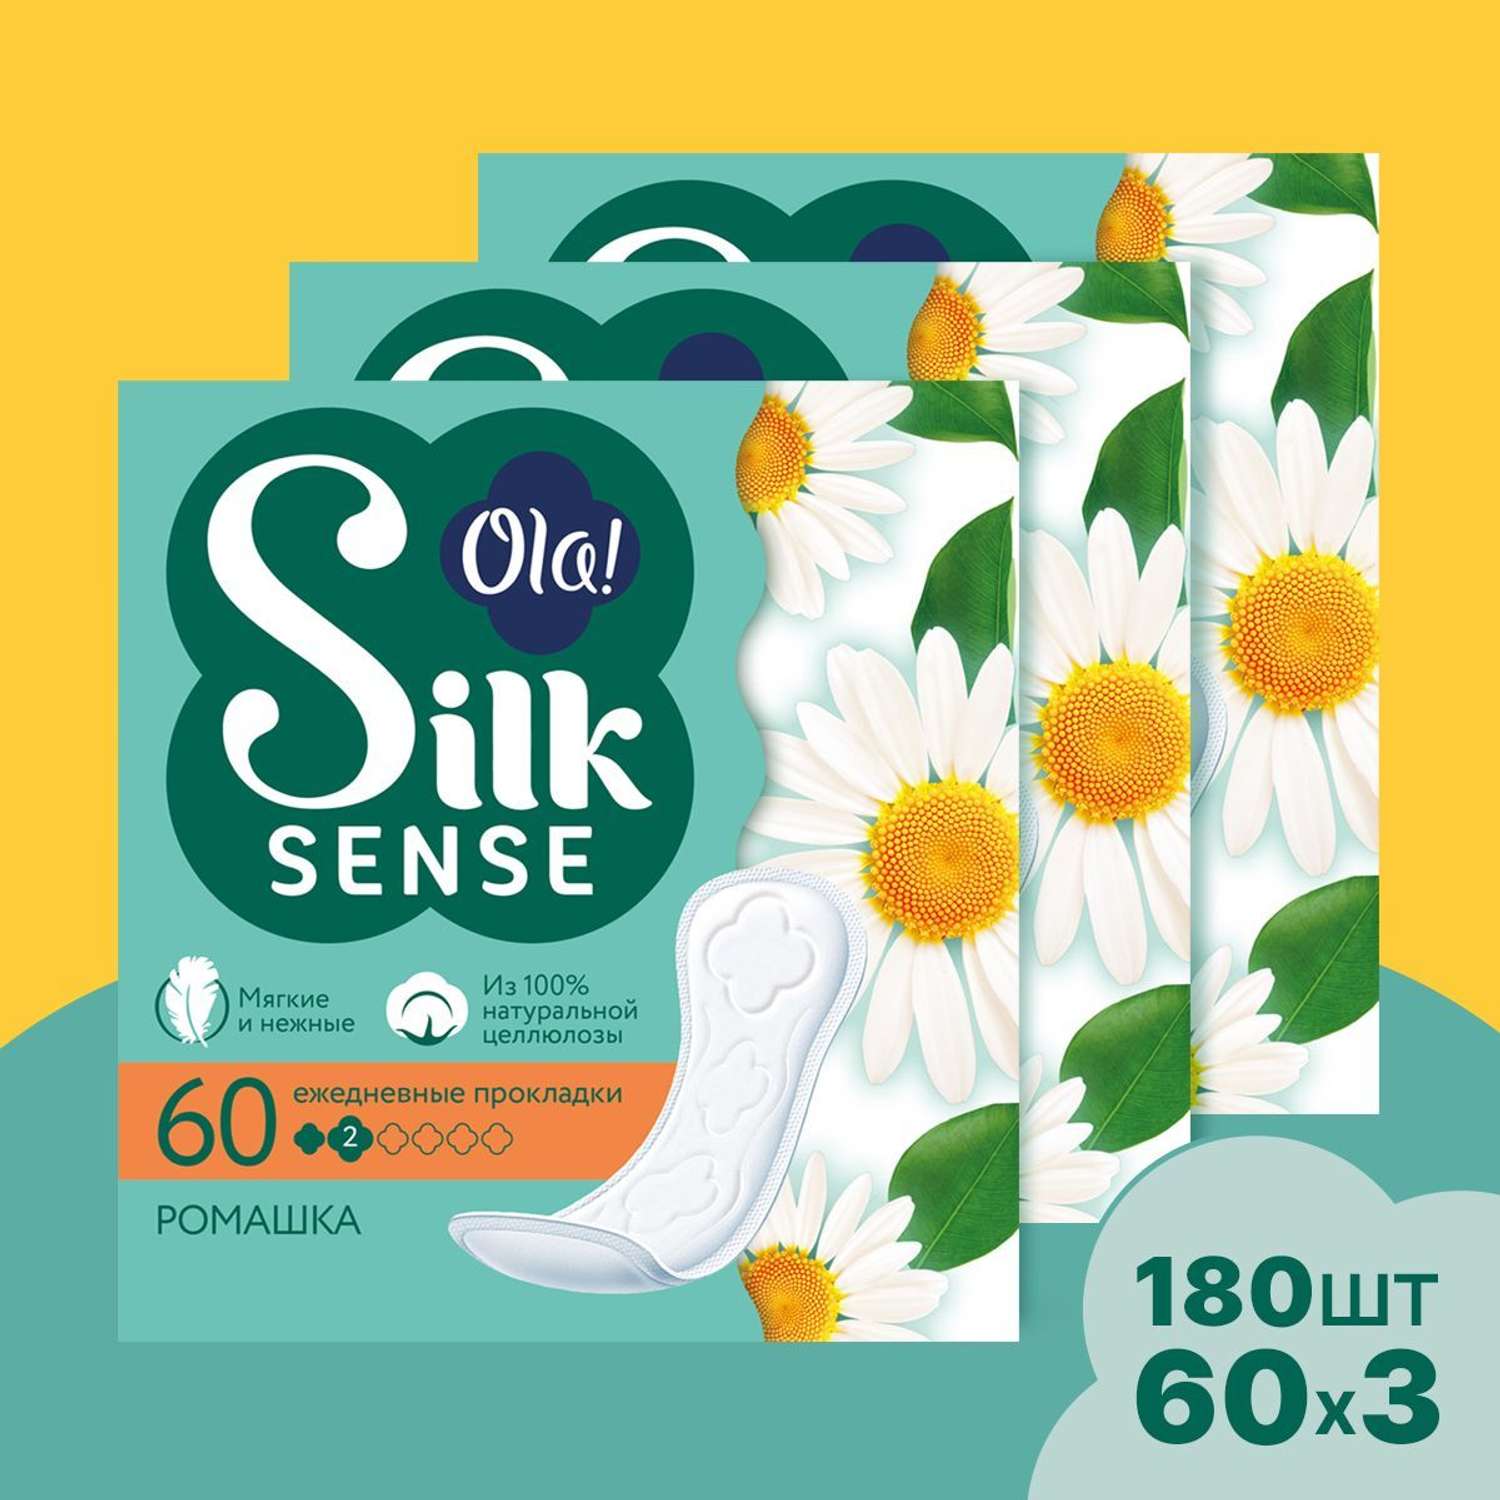 Ежедневные прокладки Ola! Silk Sense Daily Deo ежедневные Ромашка 60x3 упаковки 180 шт - фото 1